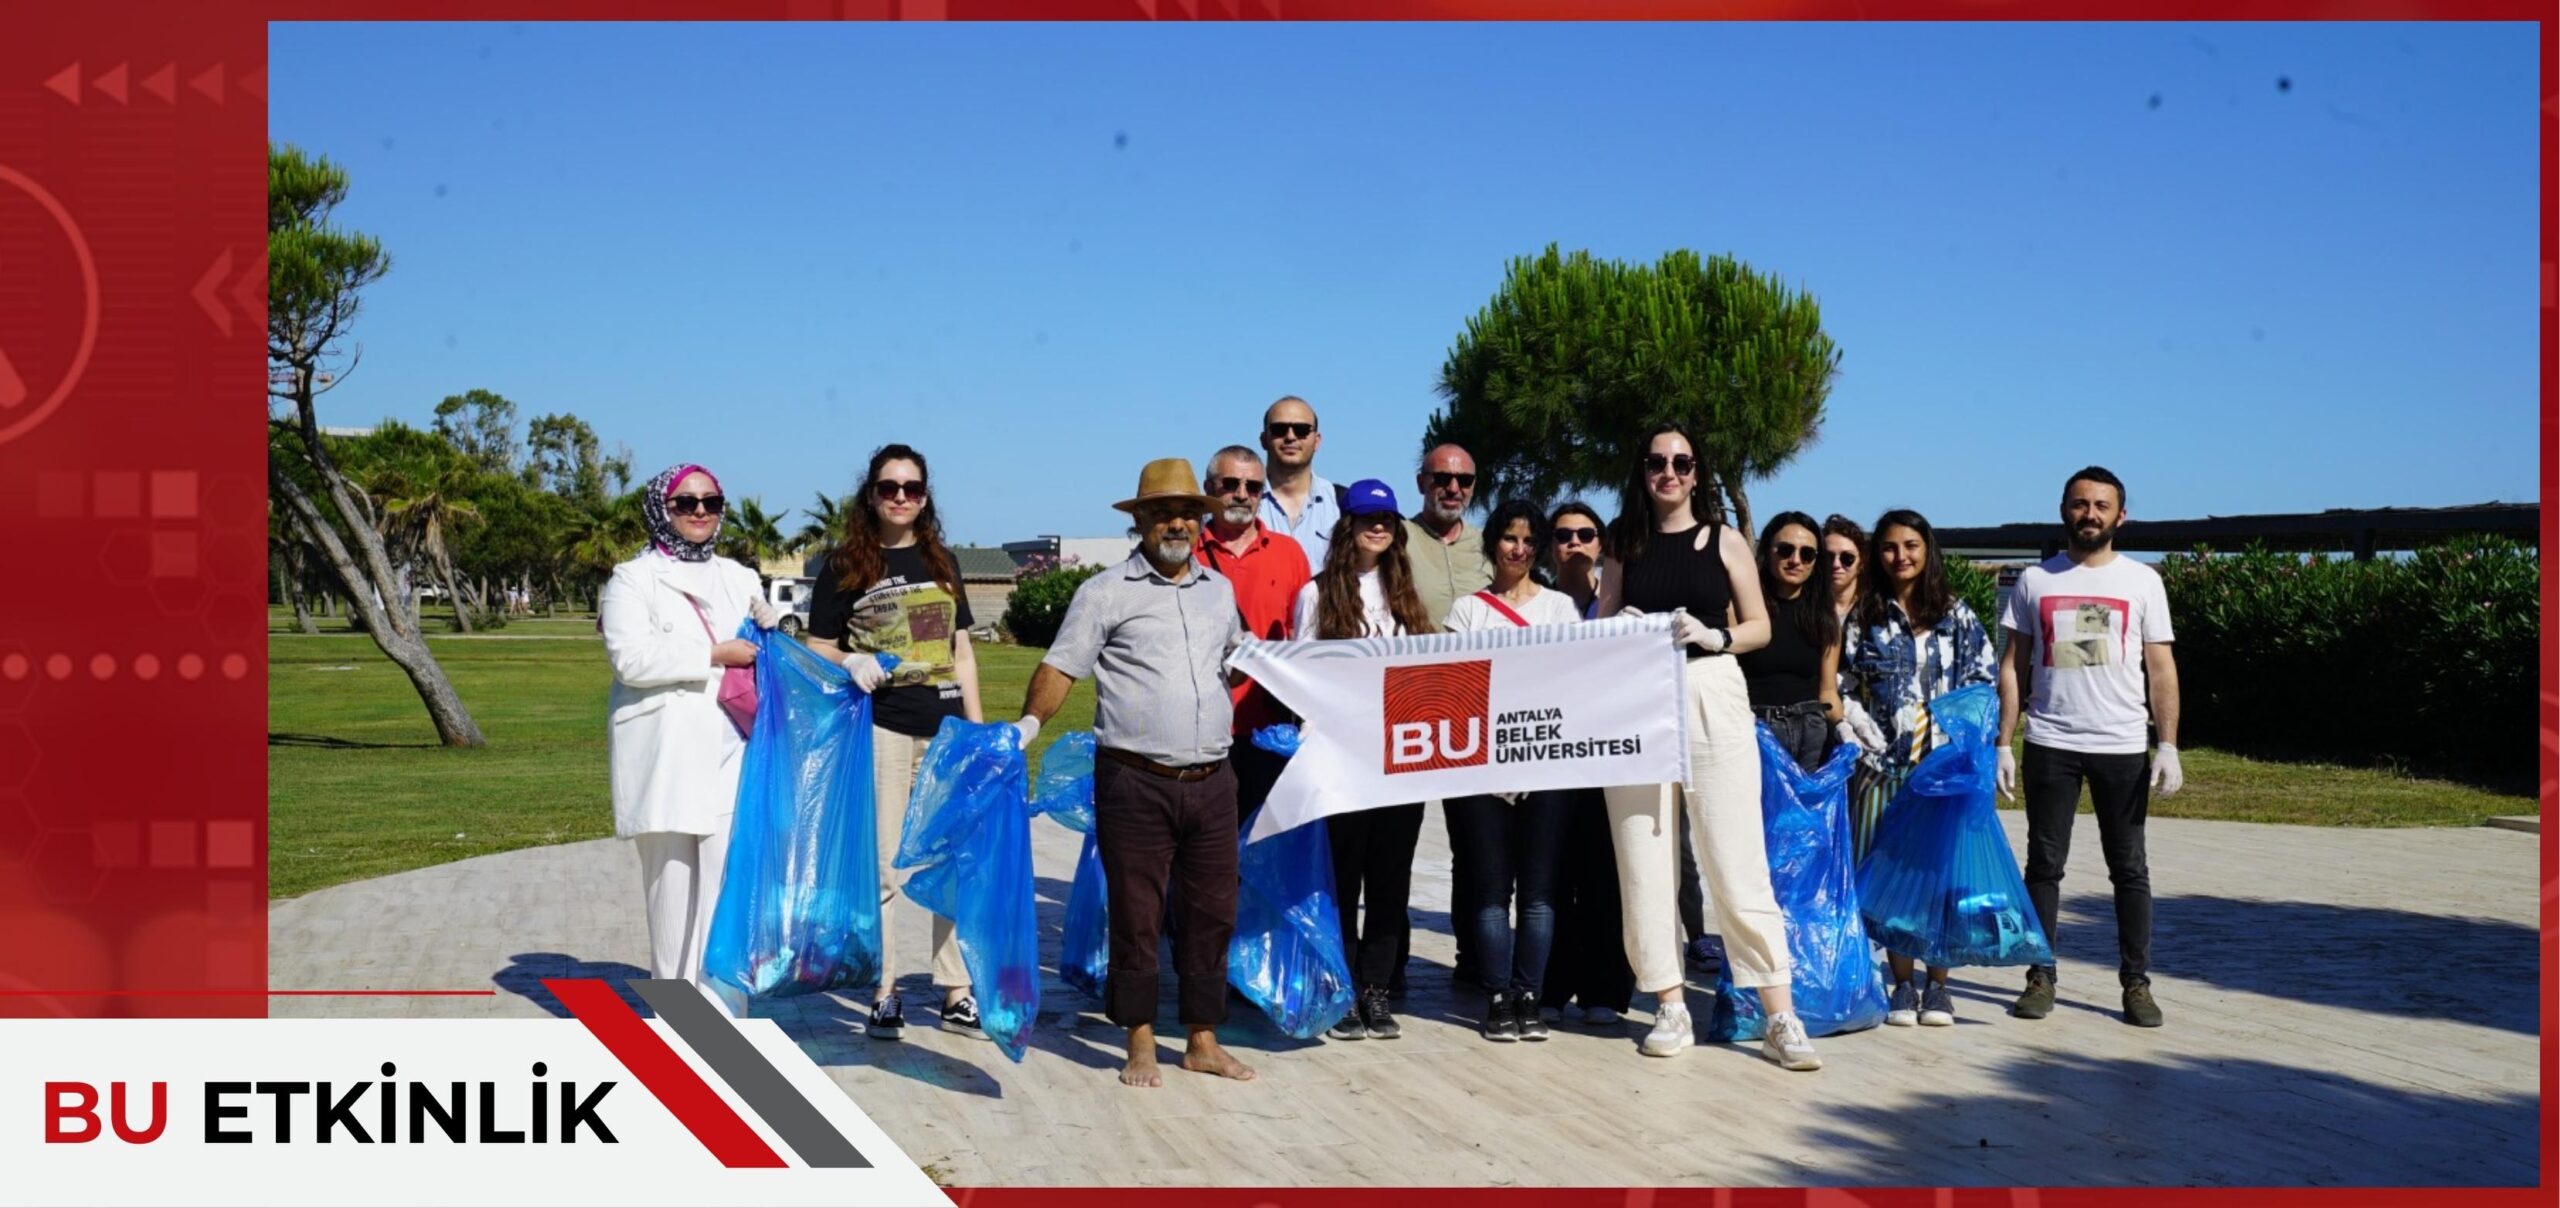 antalyabelek universitesi find and study 2 scaled - Antalya Belek University